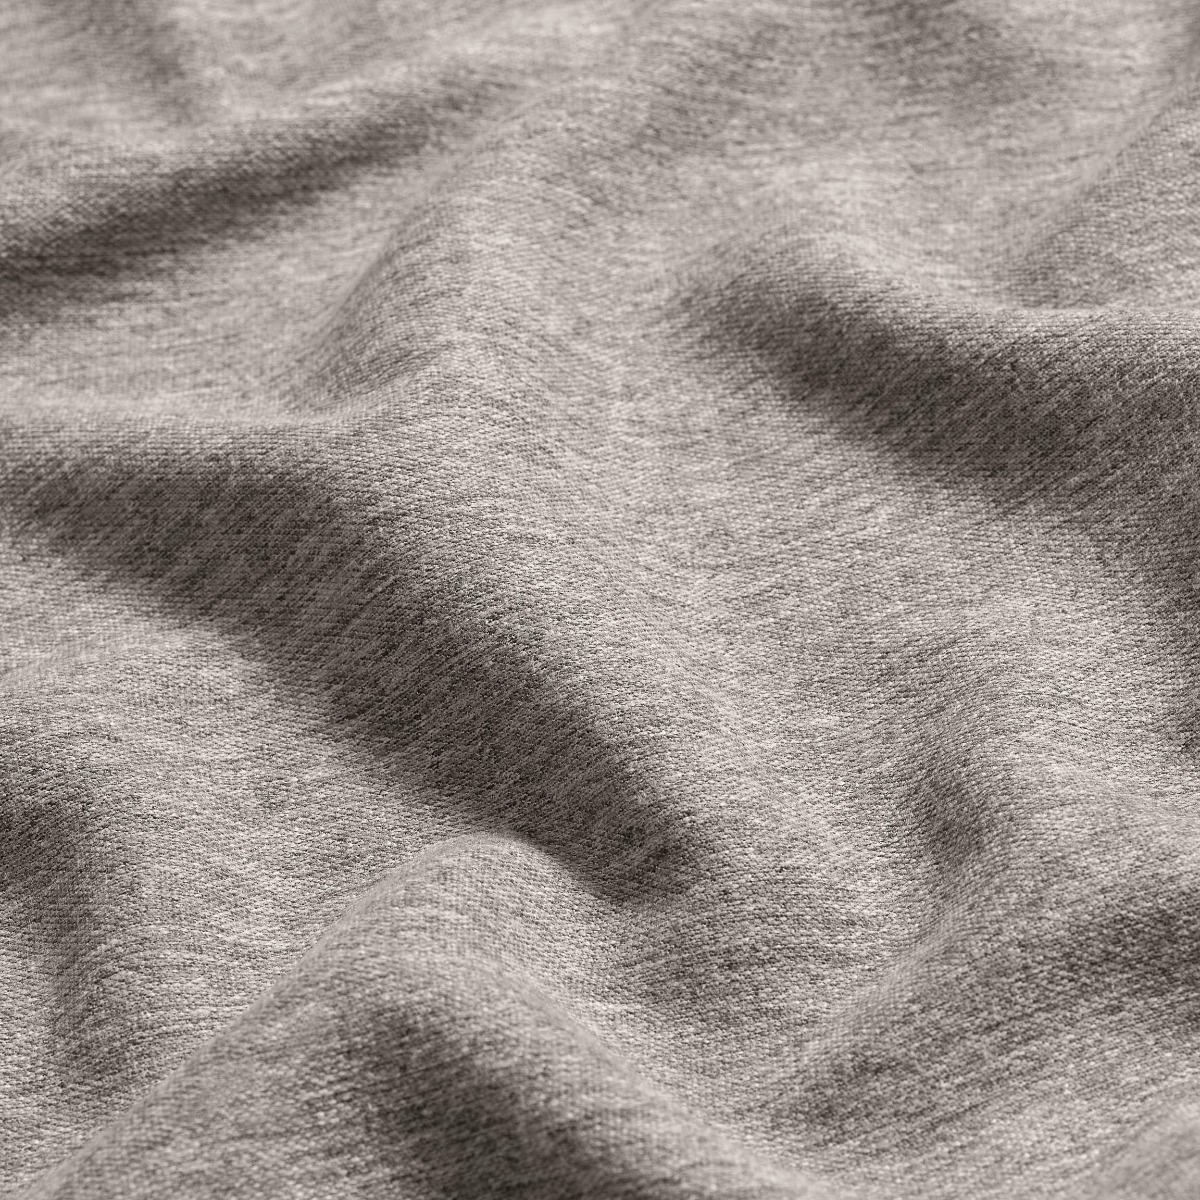 Раздвижные шторы Togas Стоклин серые 260х275 см, цвет серый, размер 260х275 - фото 2